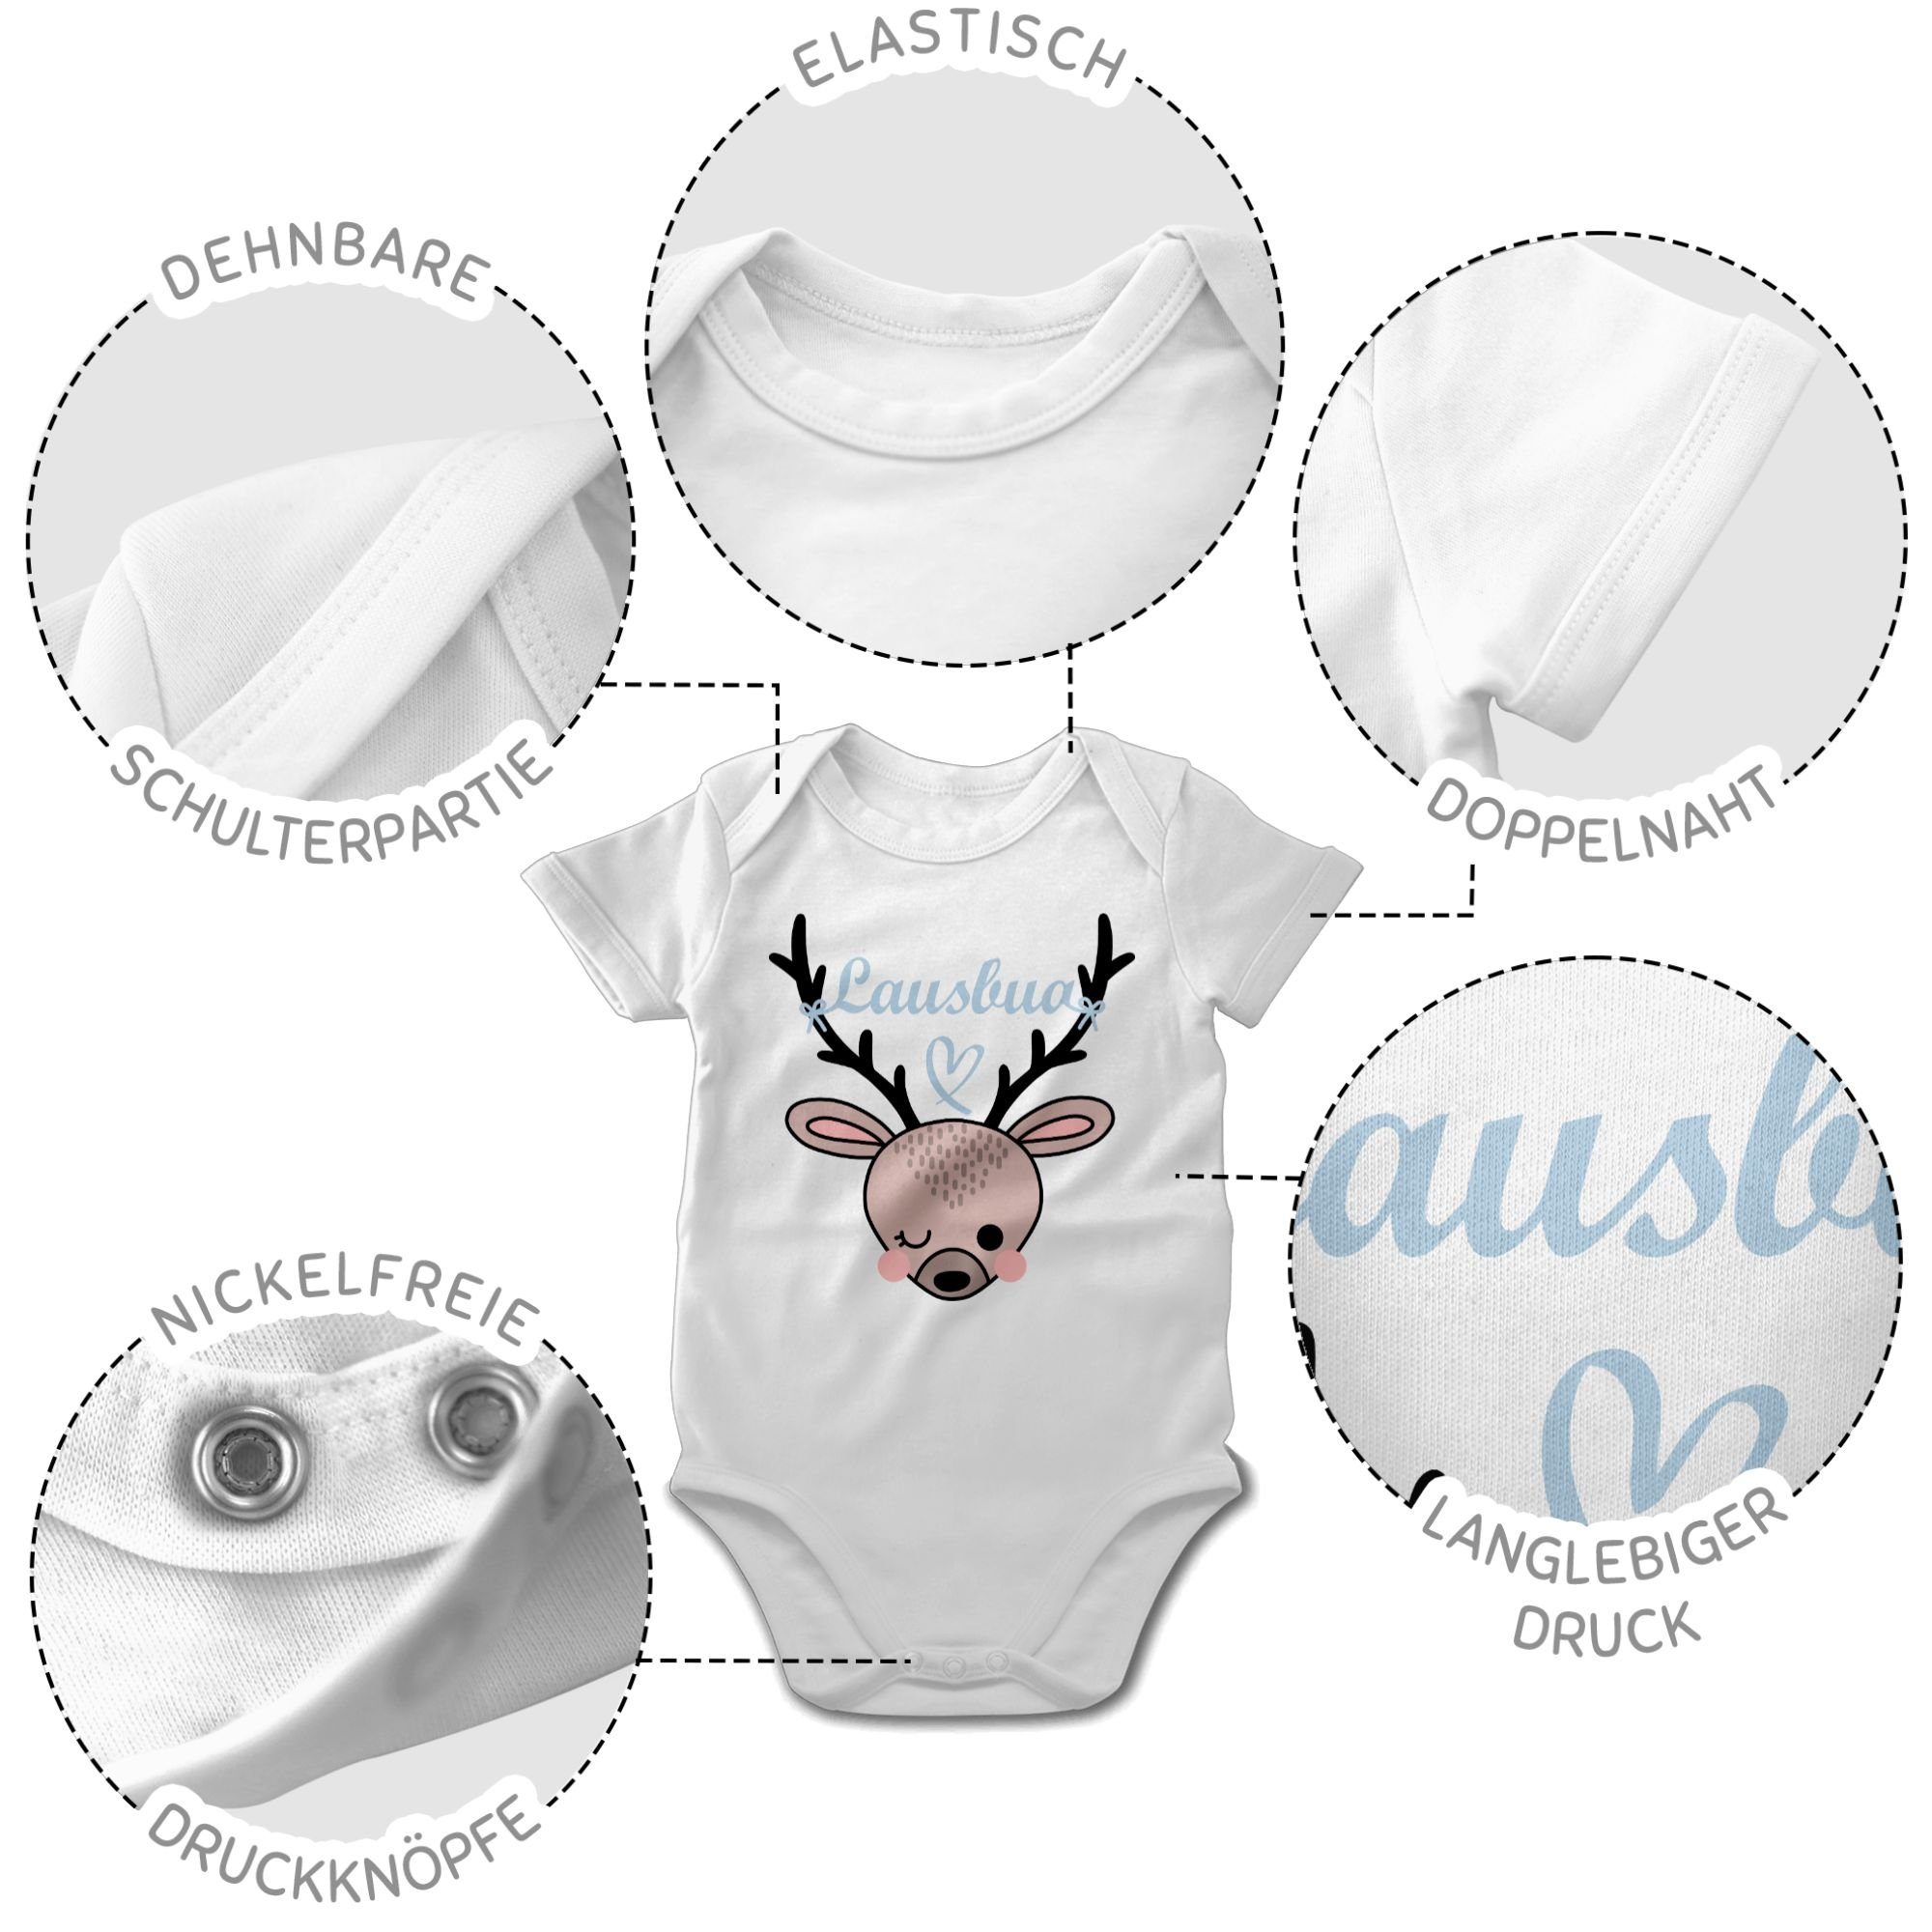 Oktoberfest Shirtbody Mode 2 Baby Shirtracer Weiß Reh Lausbua Outfit für